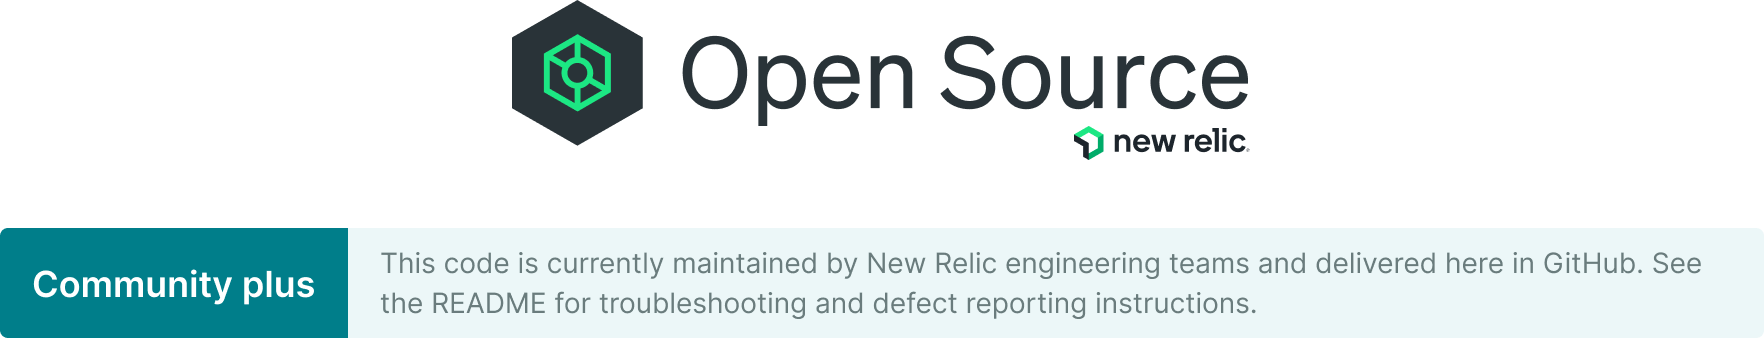 New Relic Community Plus header